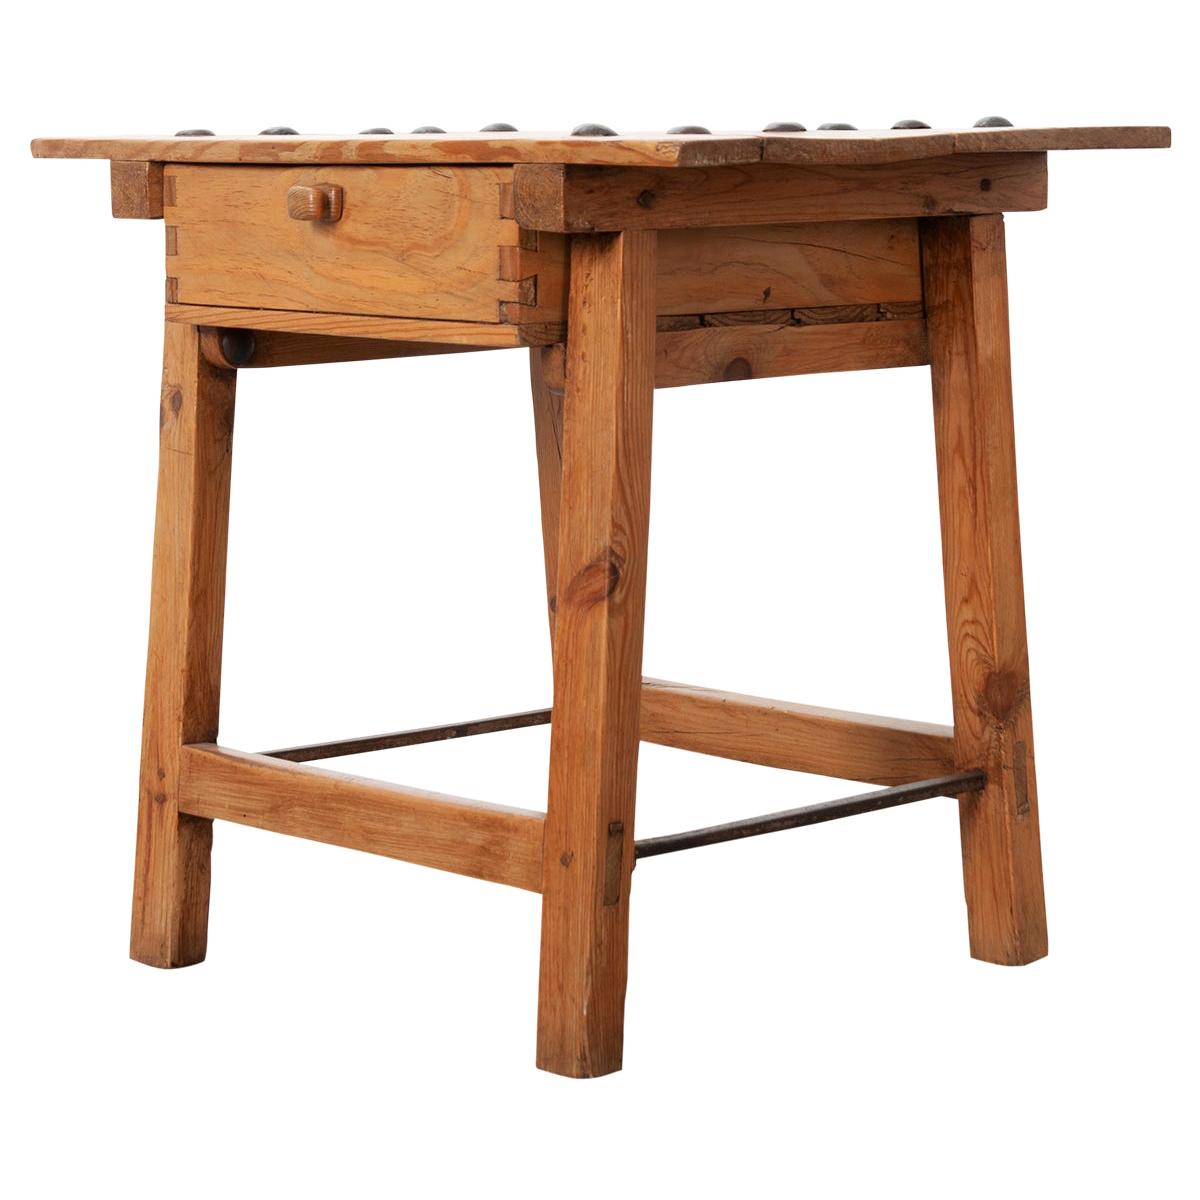 Spanish 19th Century Fruitwood Table